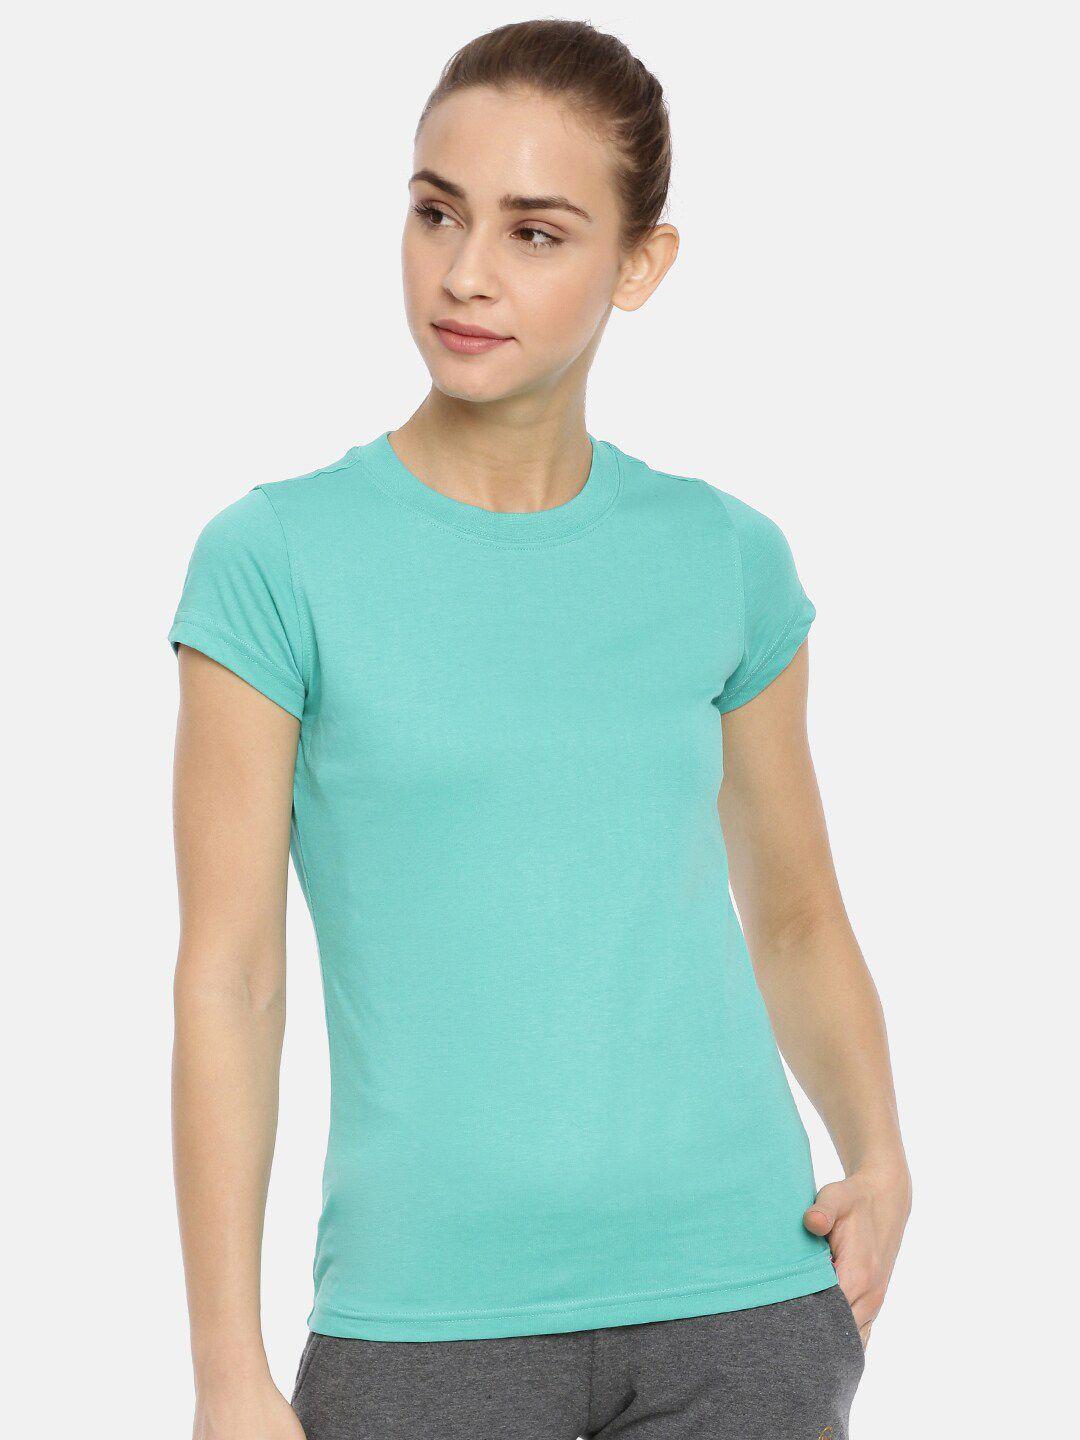 macrowoman w-series round neck short sleeve cotton t-shirt